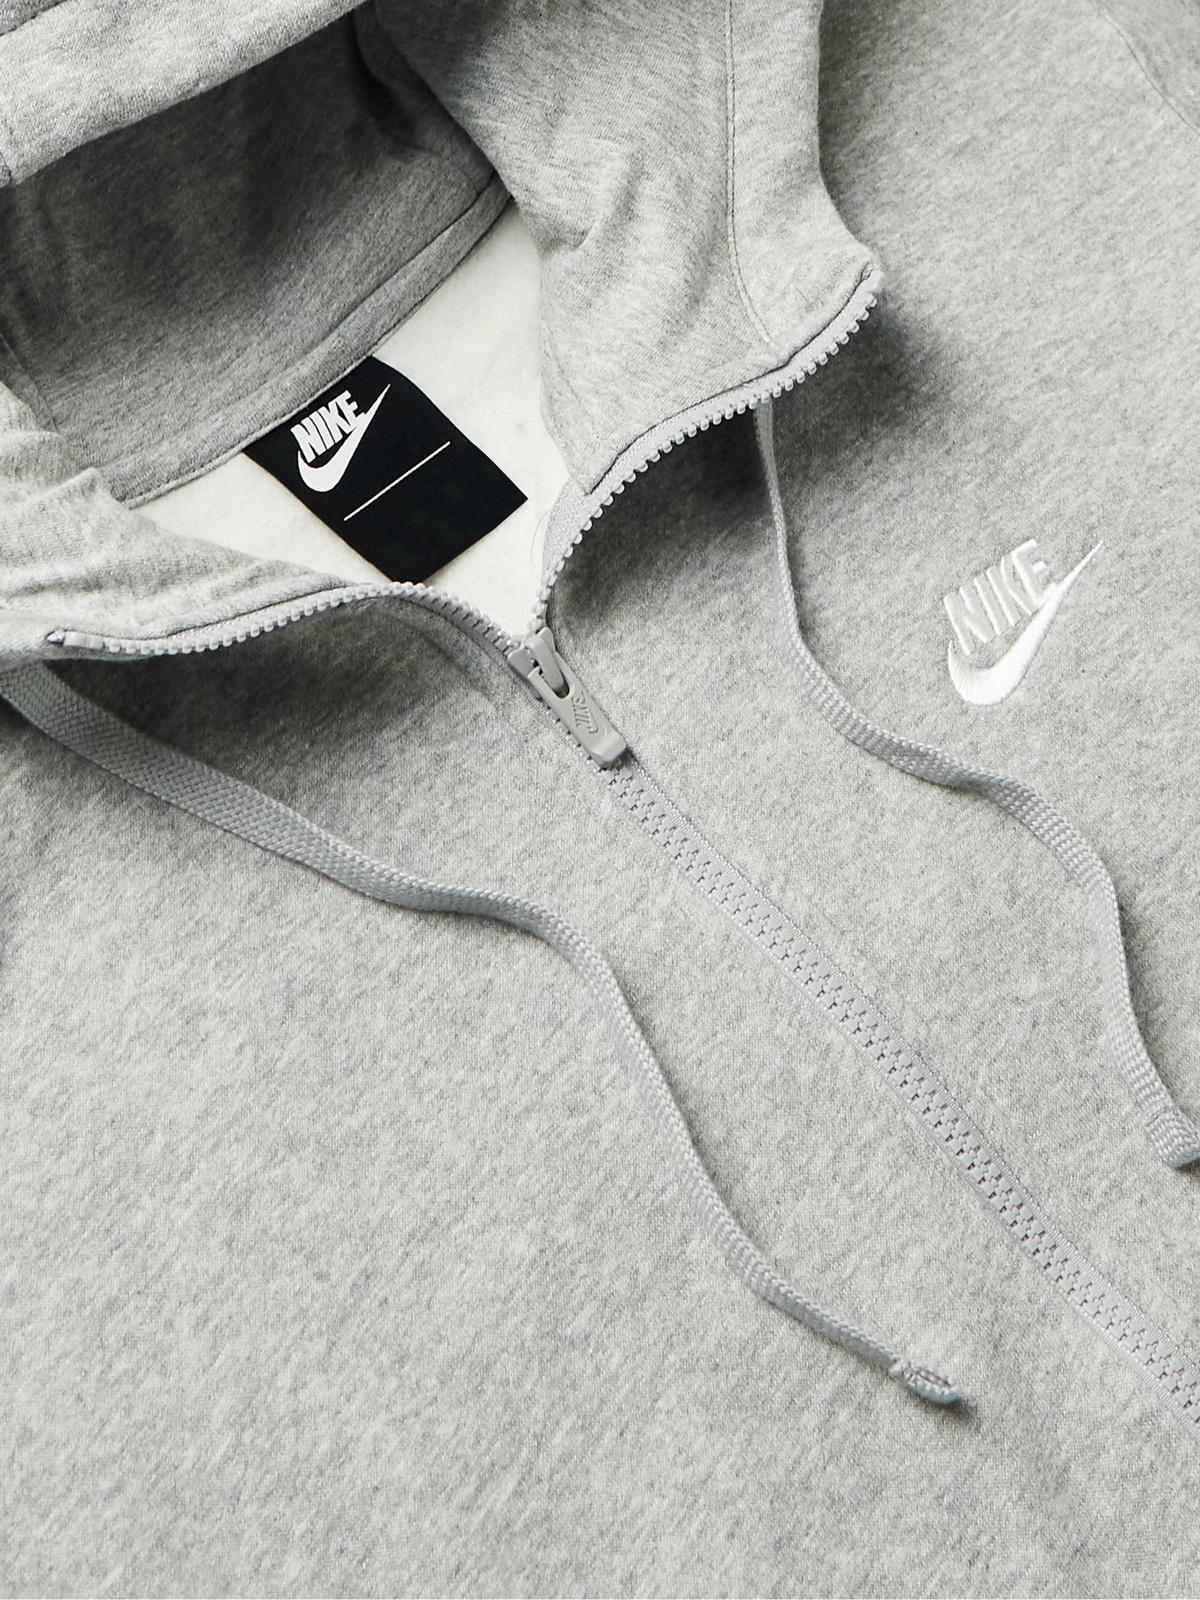 Nike logo-embroidered Cotton-Blend Tech Fleece Zip-Up Hoodie - Men - Gray Sweats - S